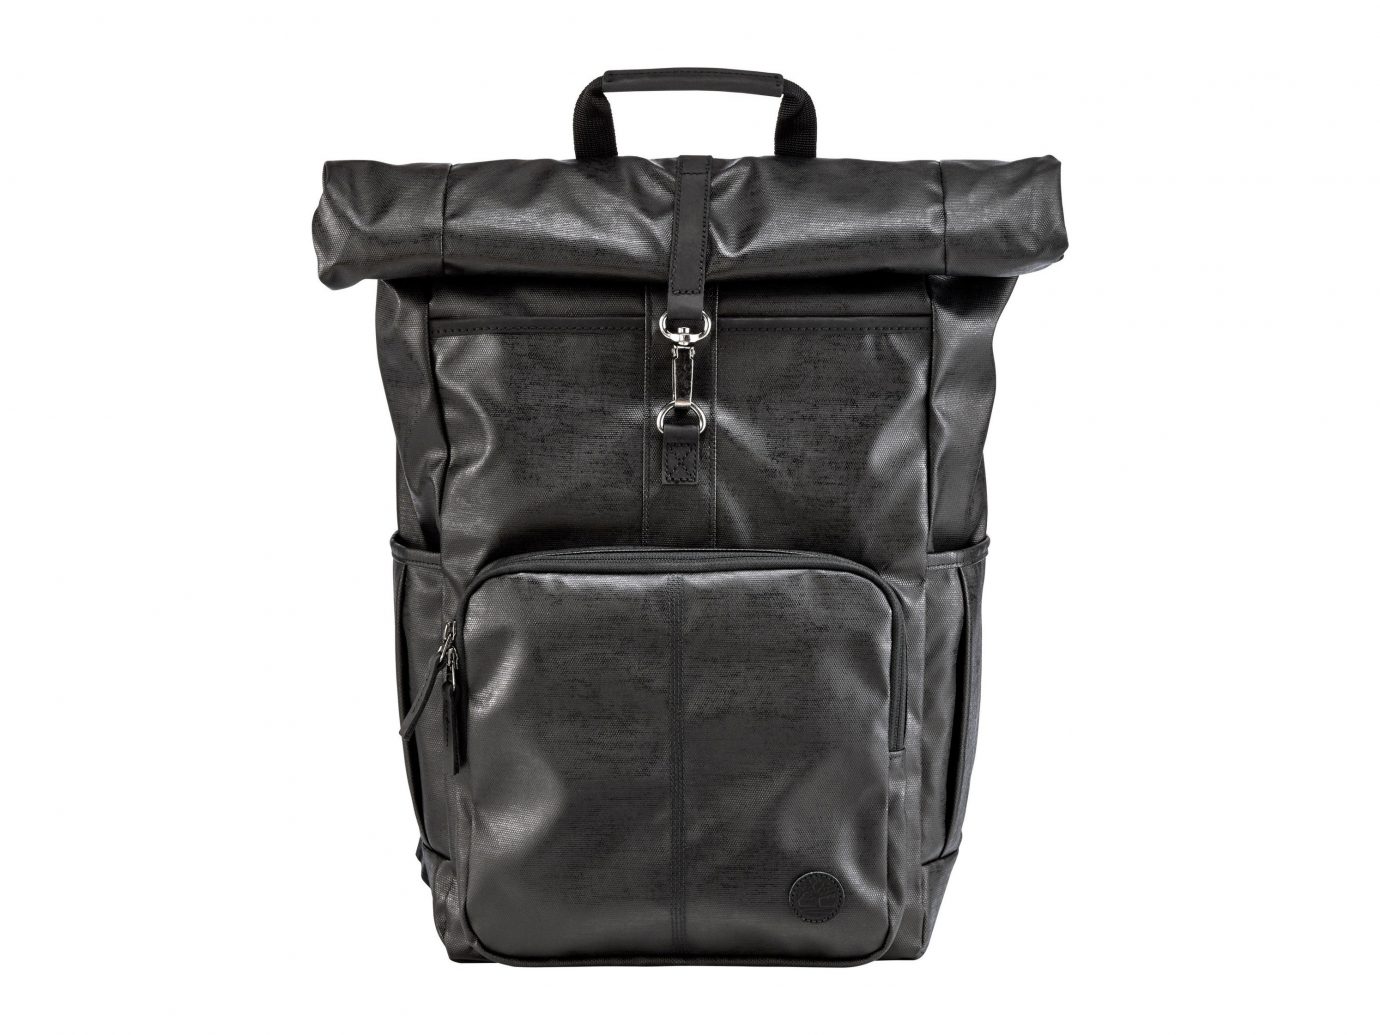 Style + Design bag black product handbag leather pocket shoulder bag product design accessory hand luggage luggage & bags brand